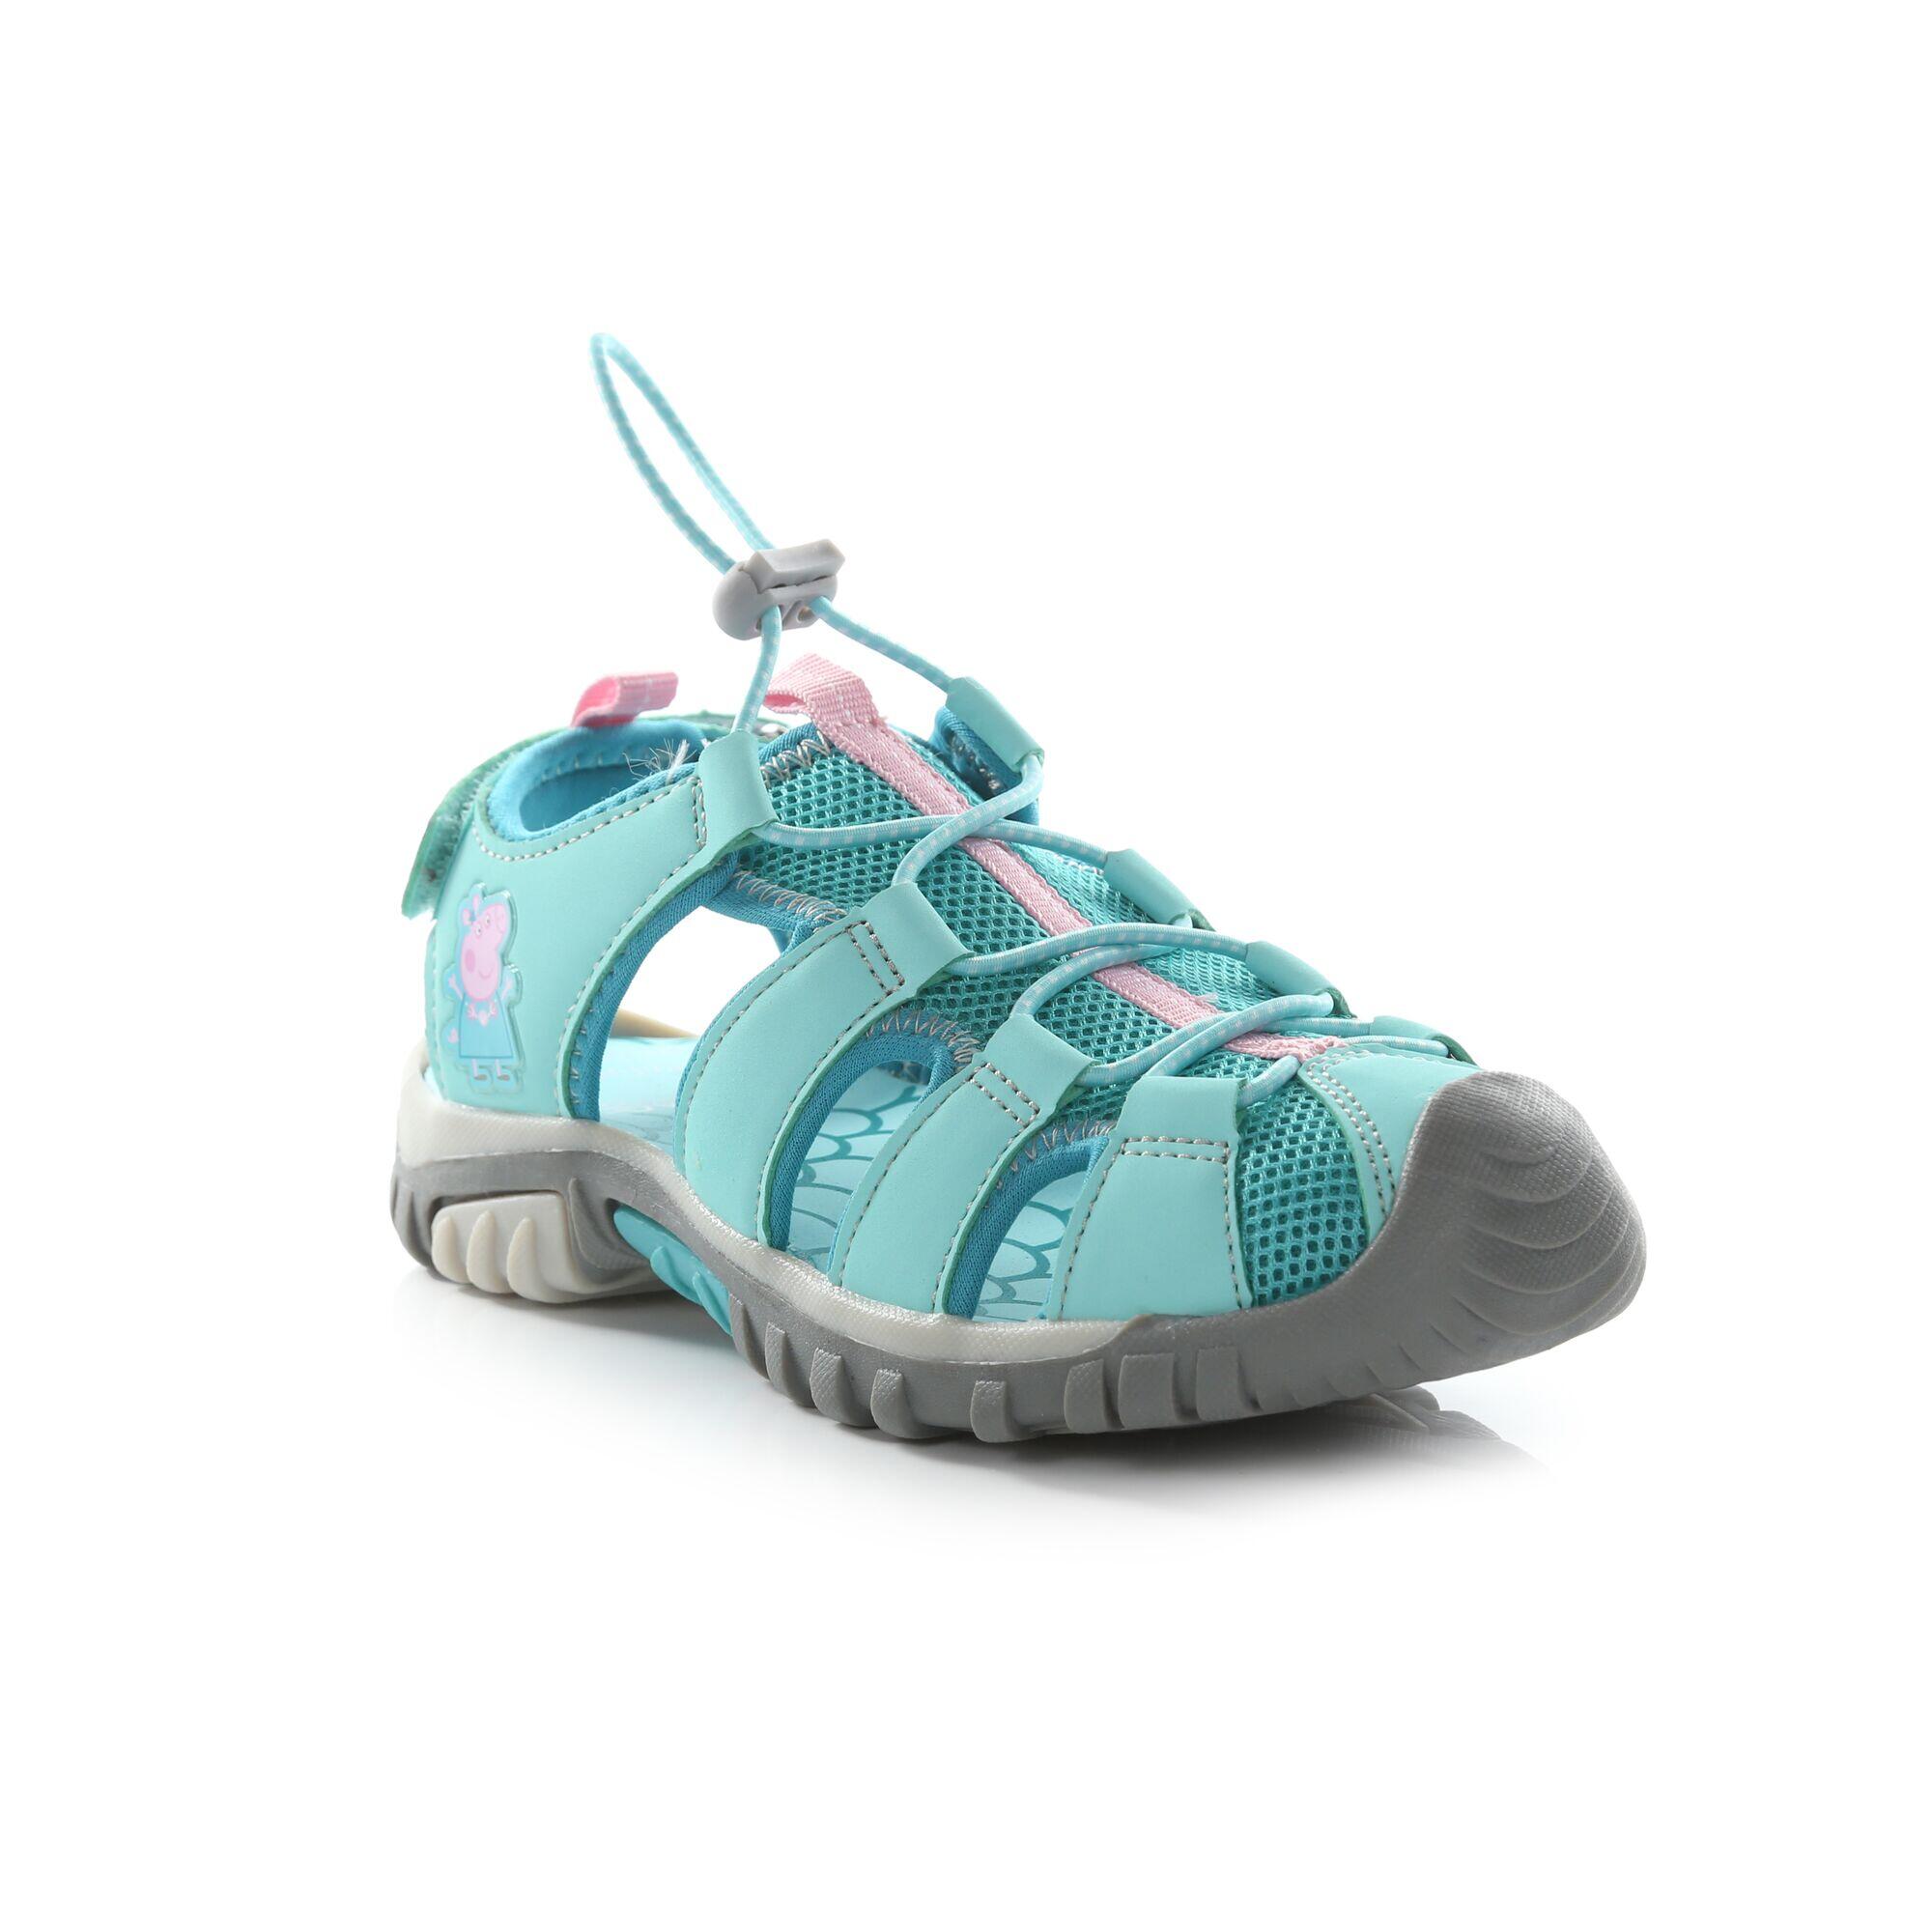 Peppa Pig Kids Walking Sandals - Aruba Blue 2/5